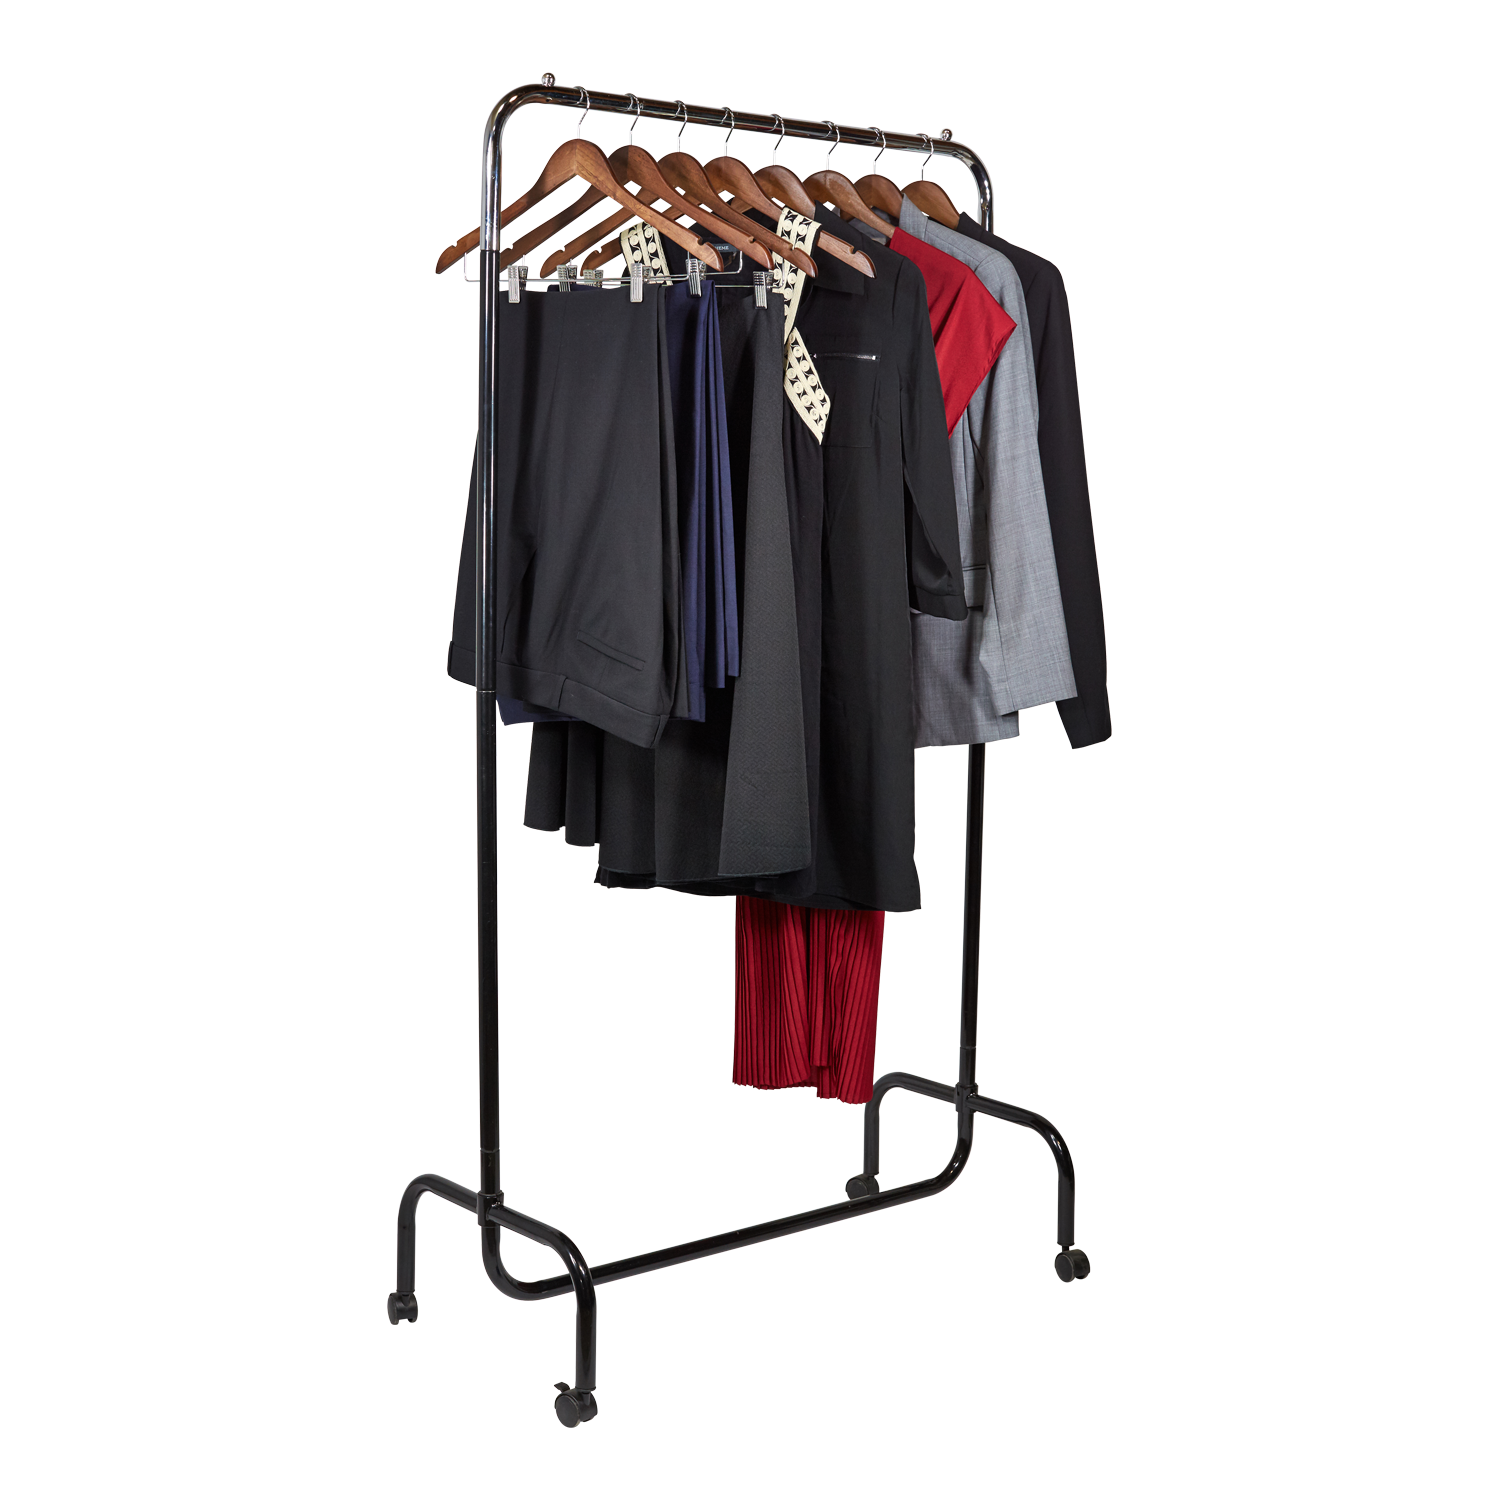 Dress clipart rack, Dress rack Transparent FREE for download